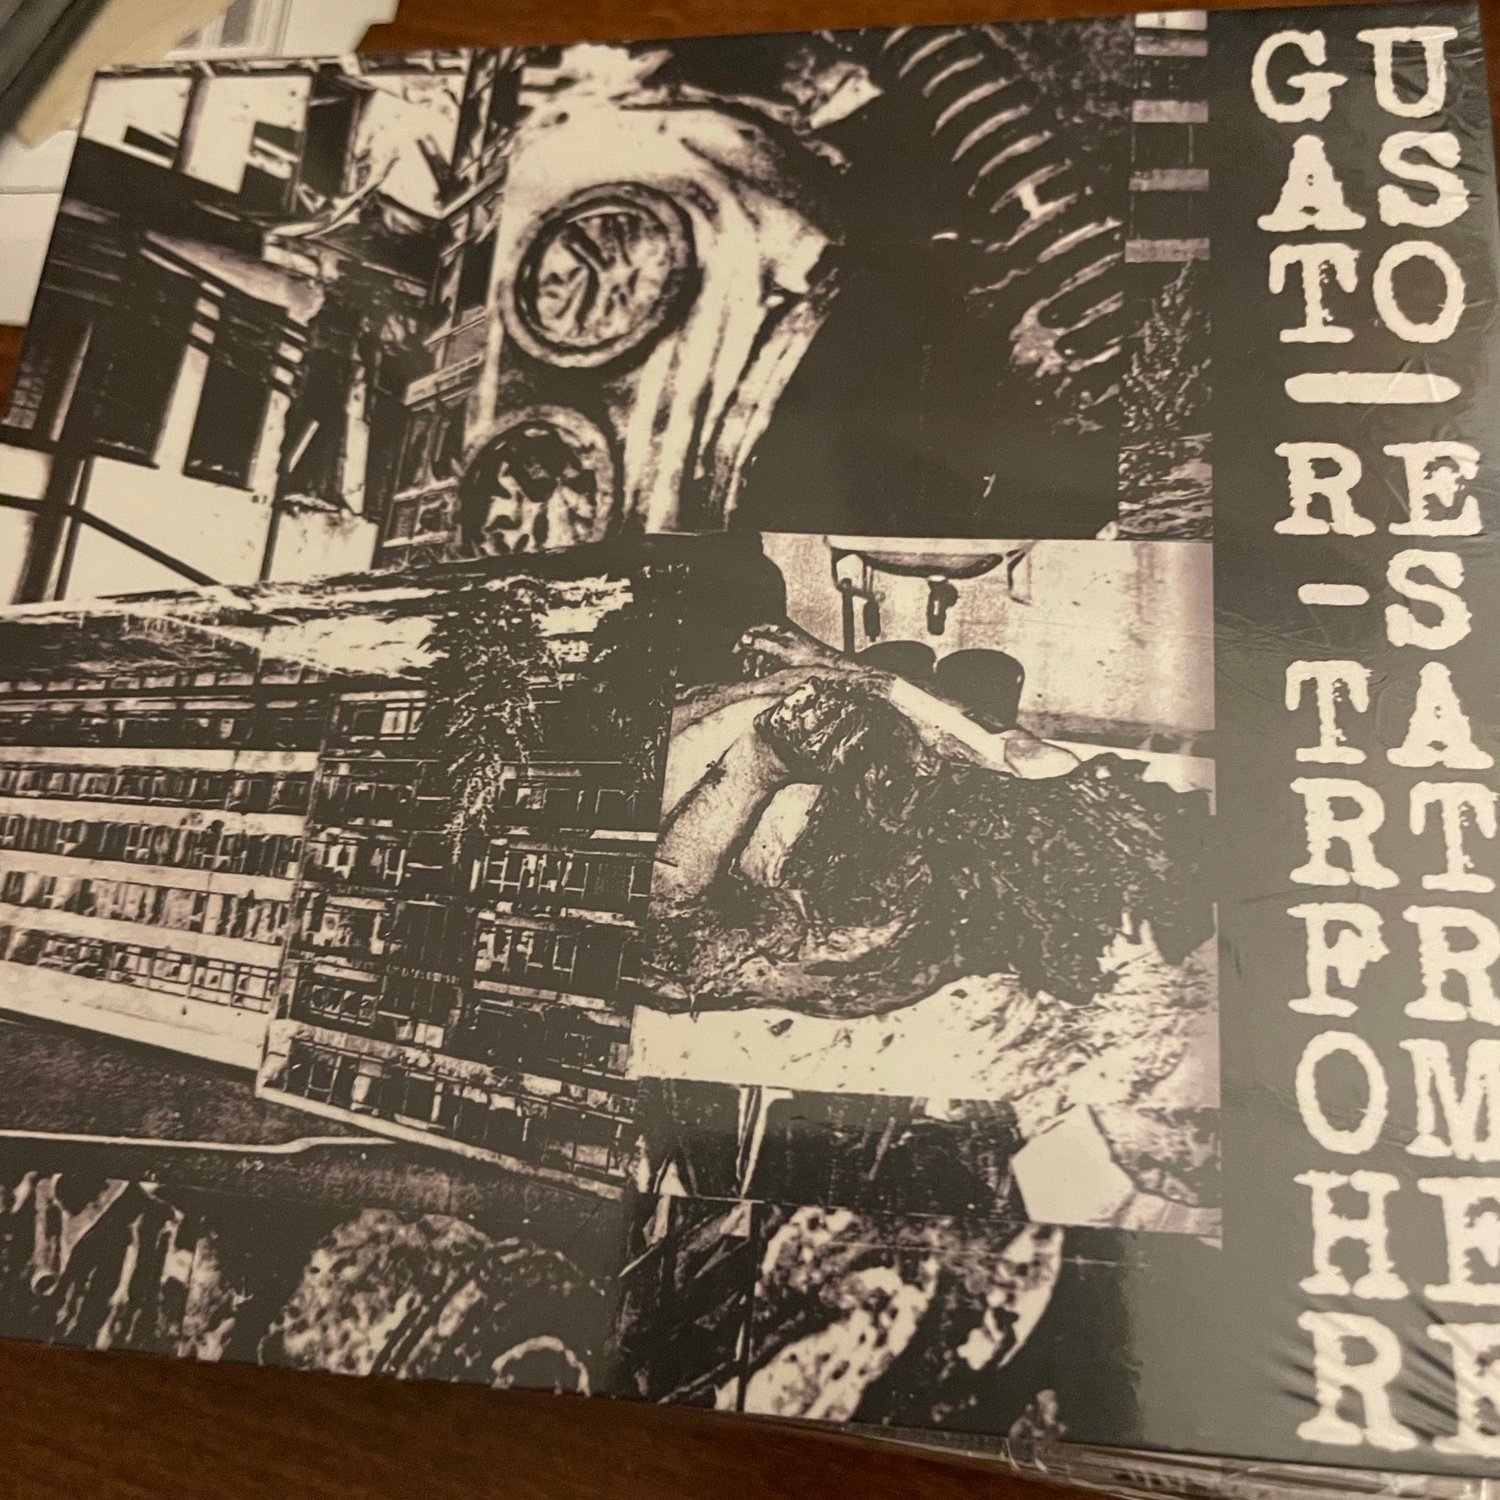 Guasto - Re-Start From Here